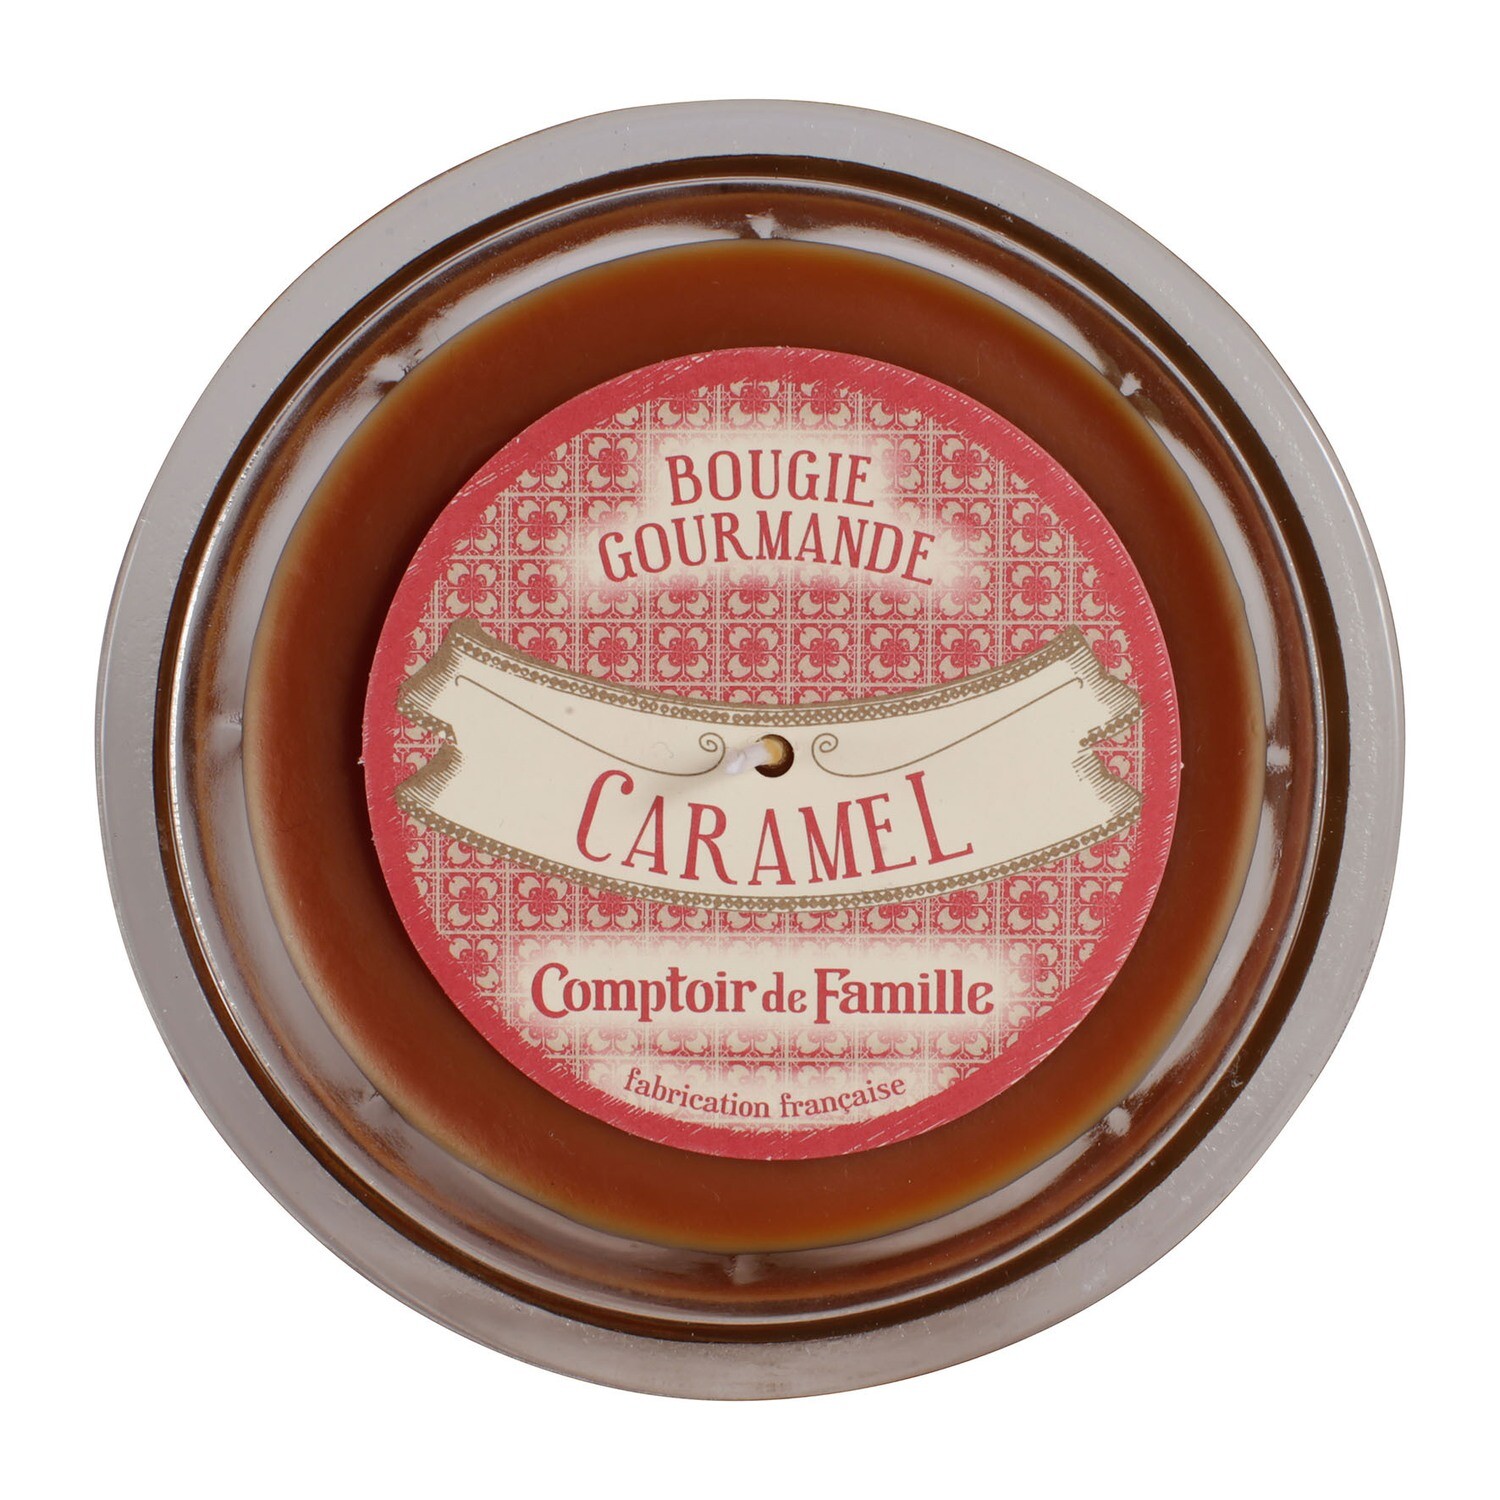 Bougie Gourmande - Caramel